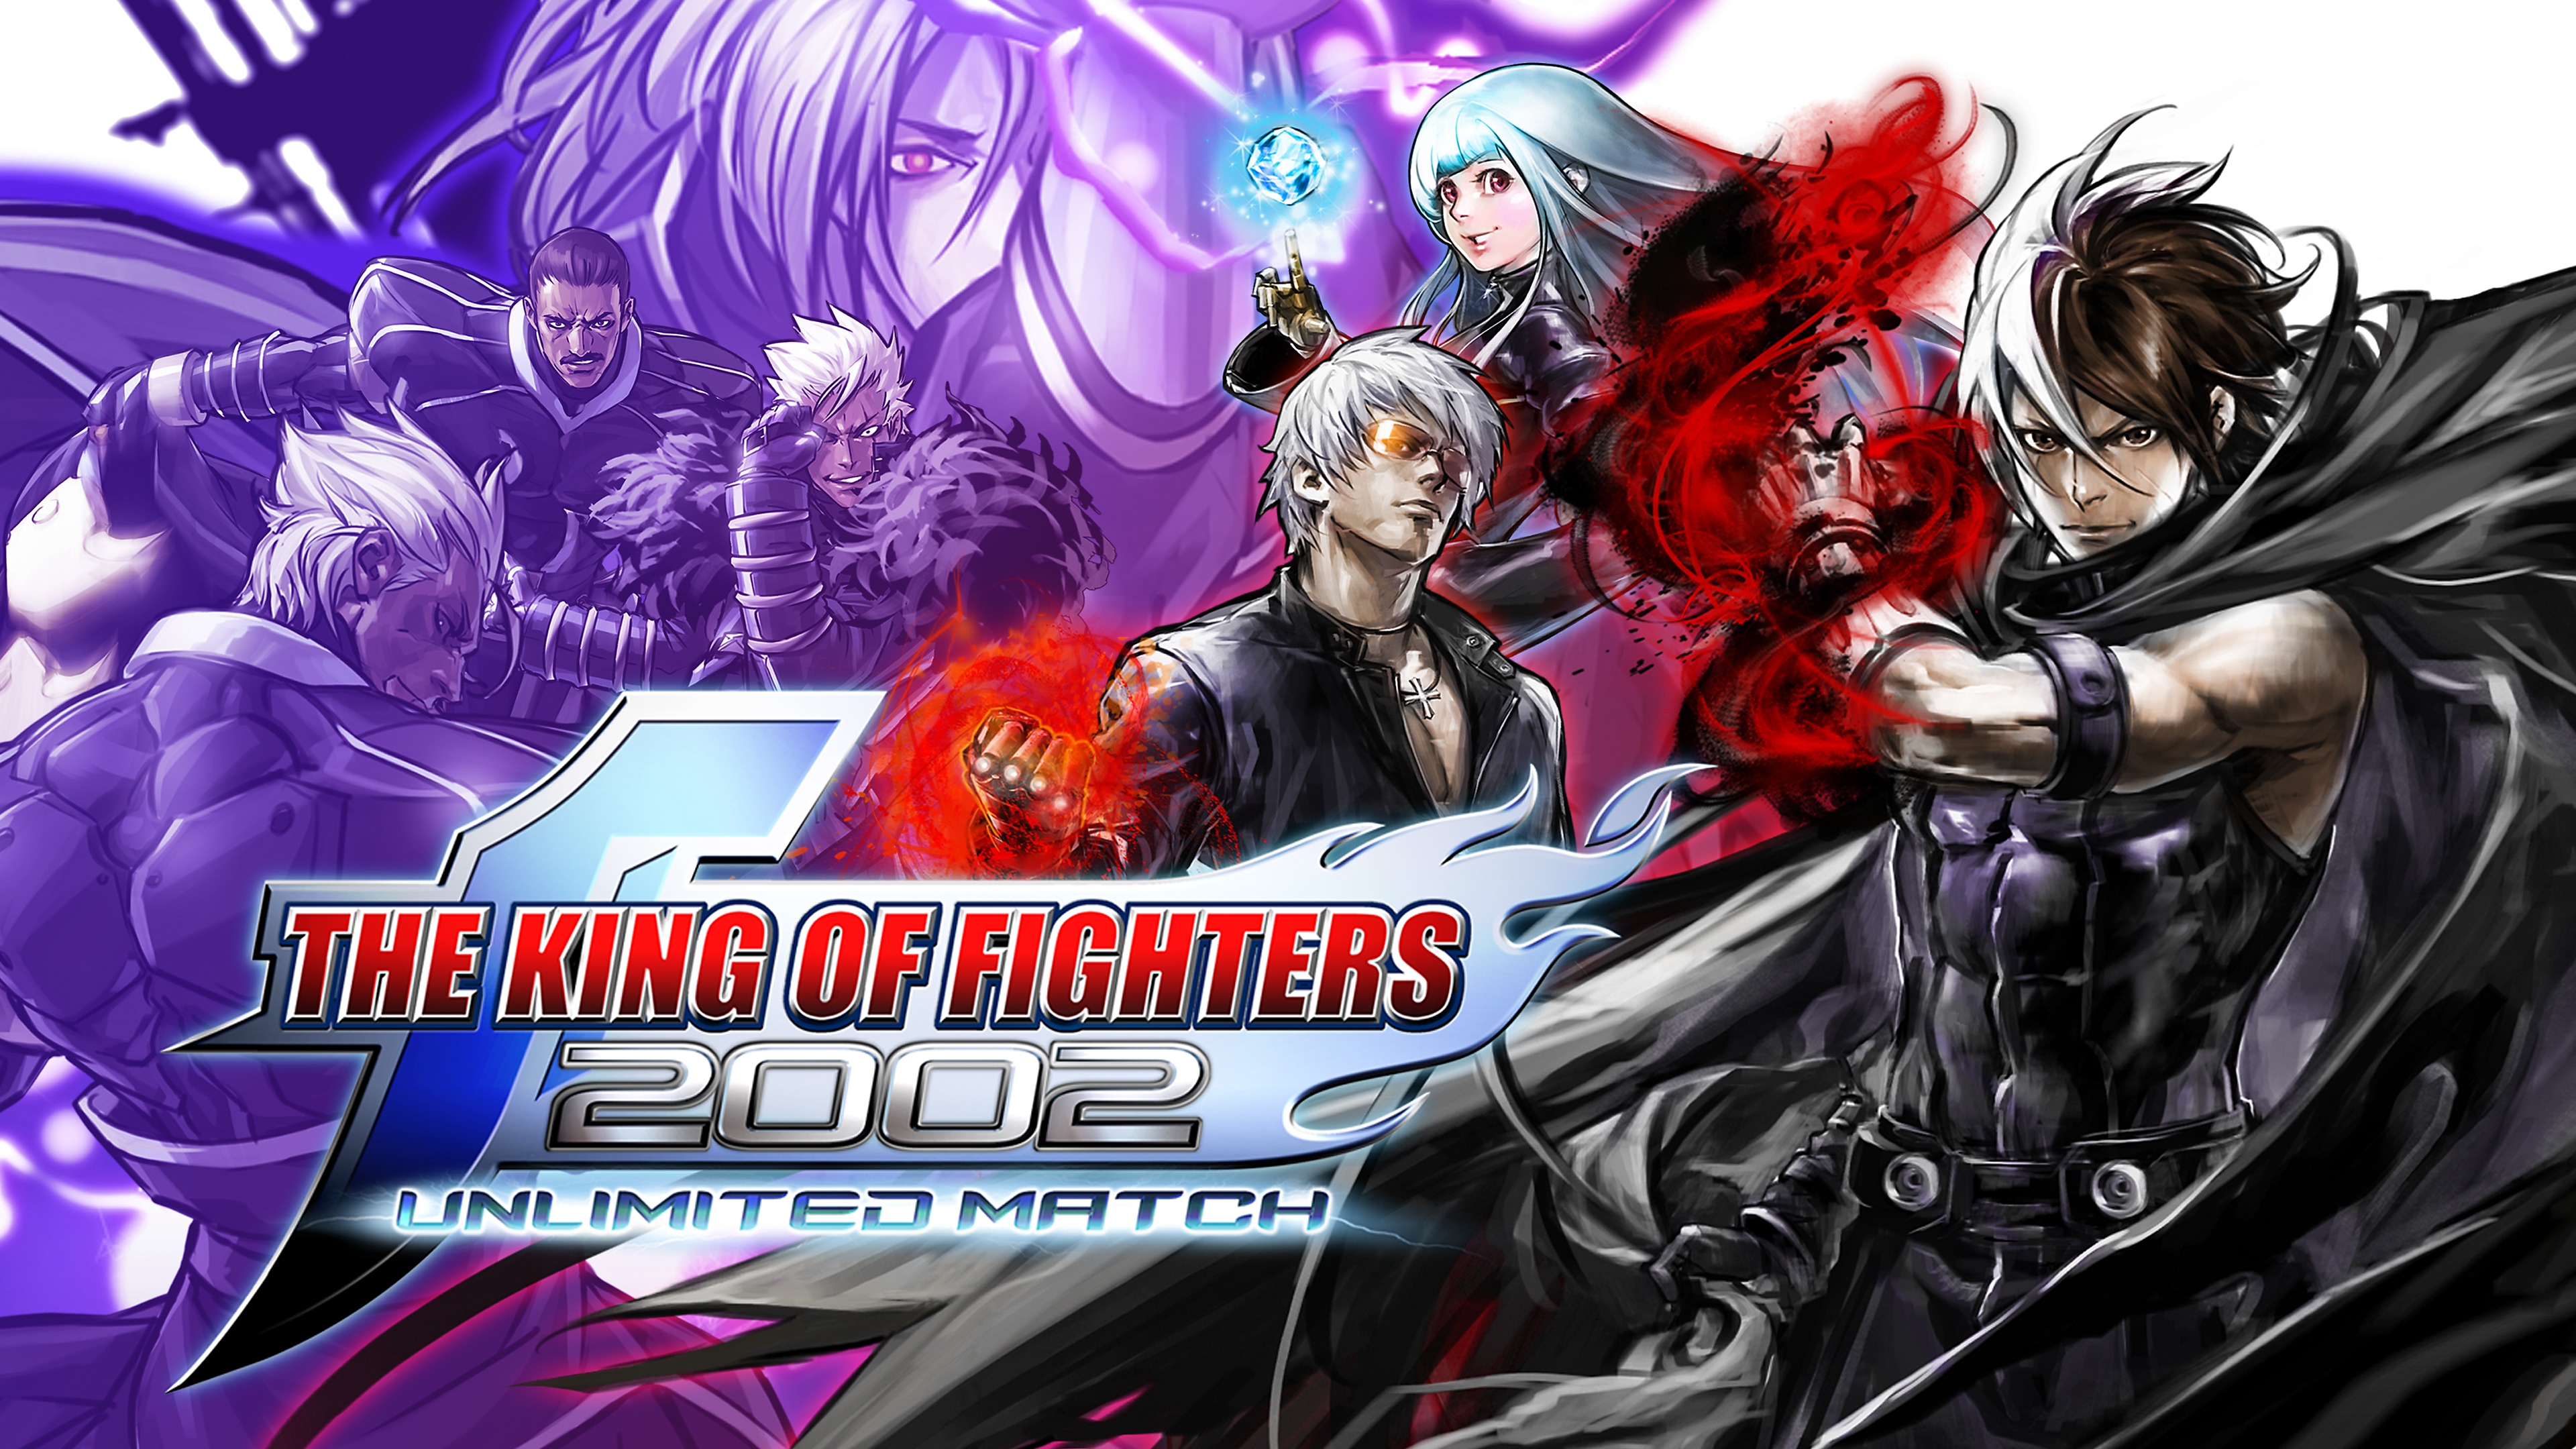 The King of Fighters 2002 – Unlimited Match, glavna ilustracija